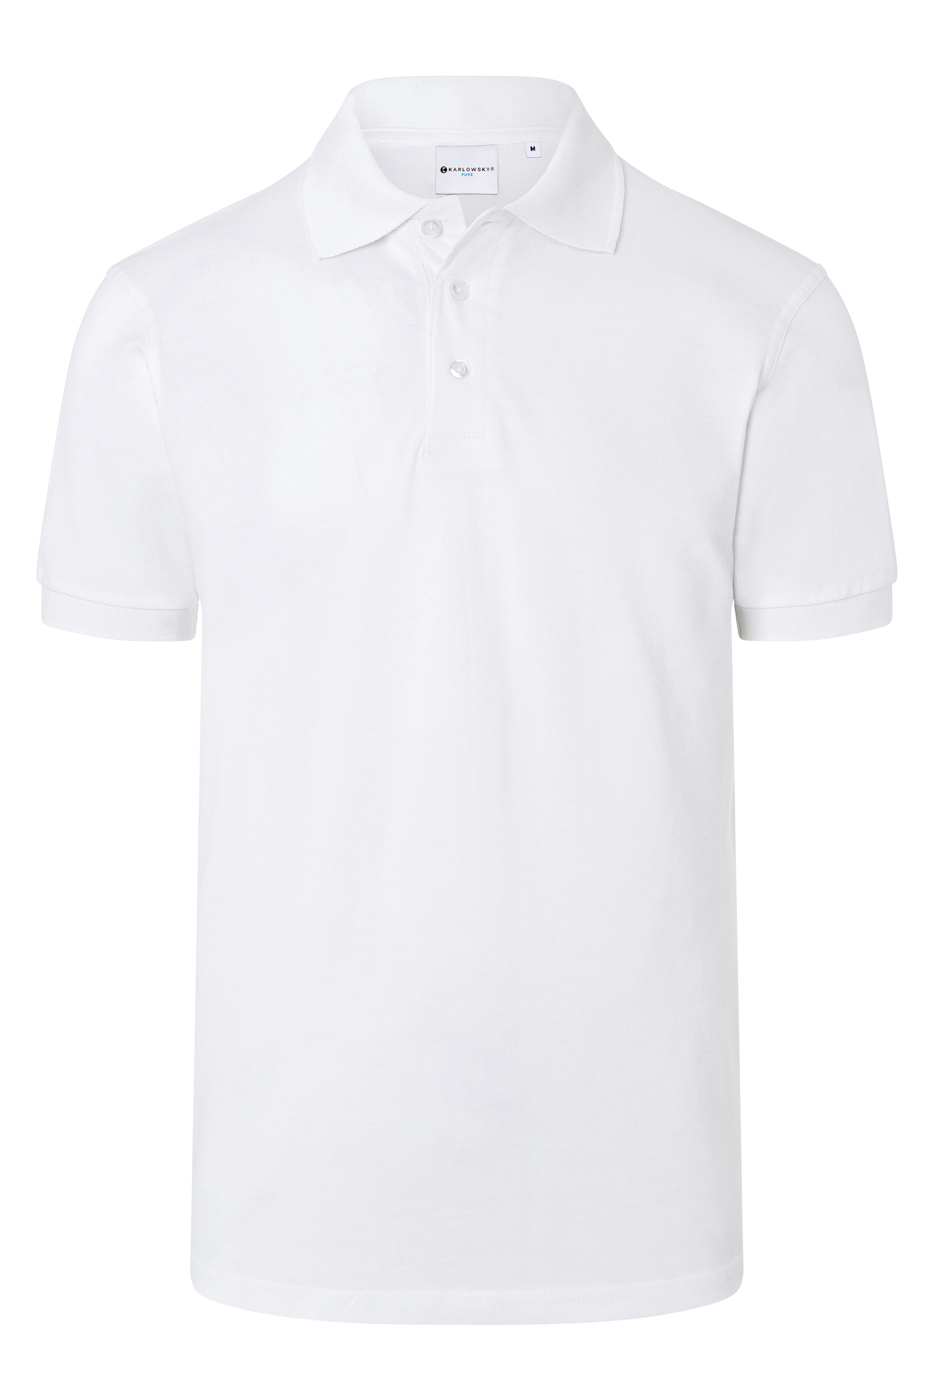 Herren Workwear Poloshirt Basic - Größe: M